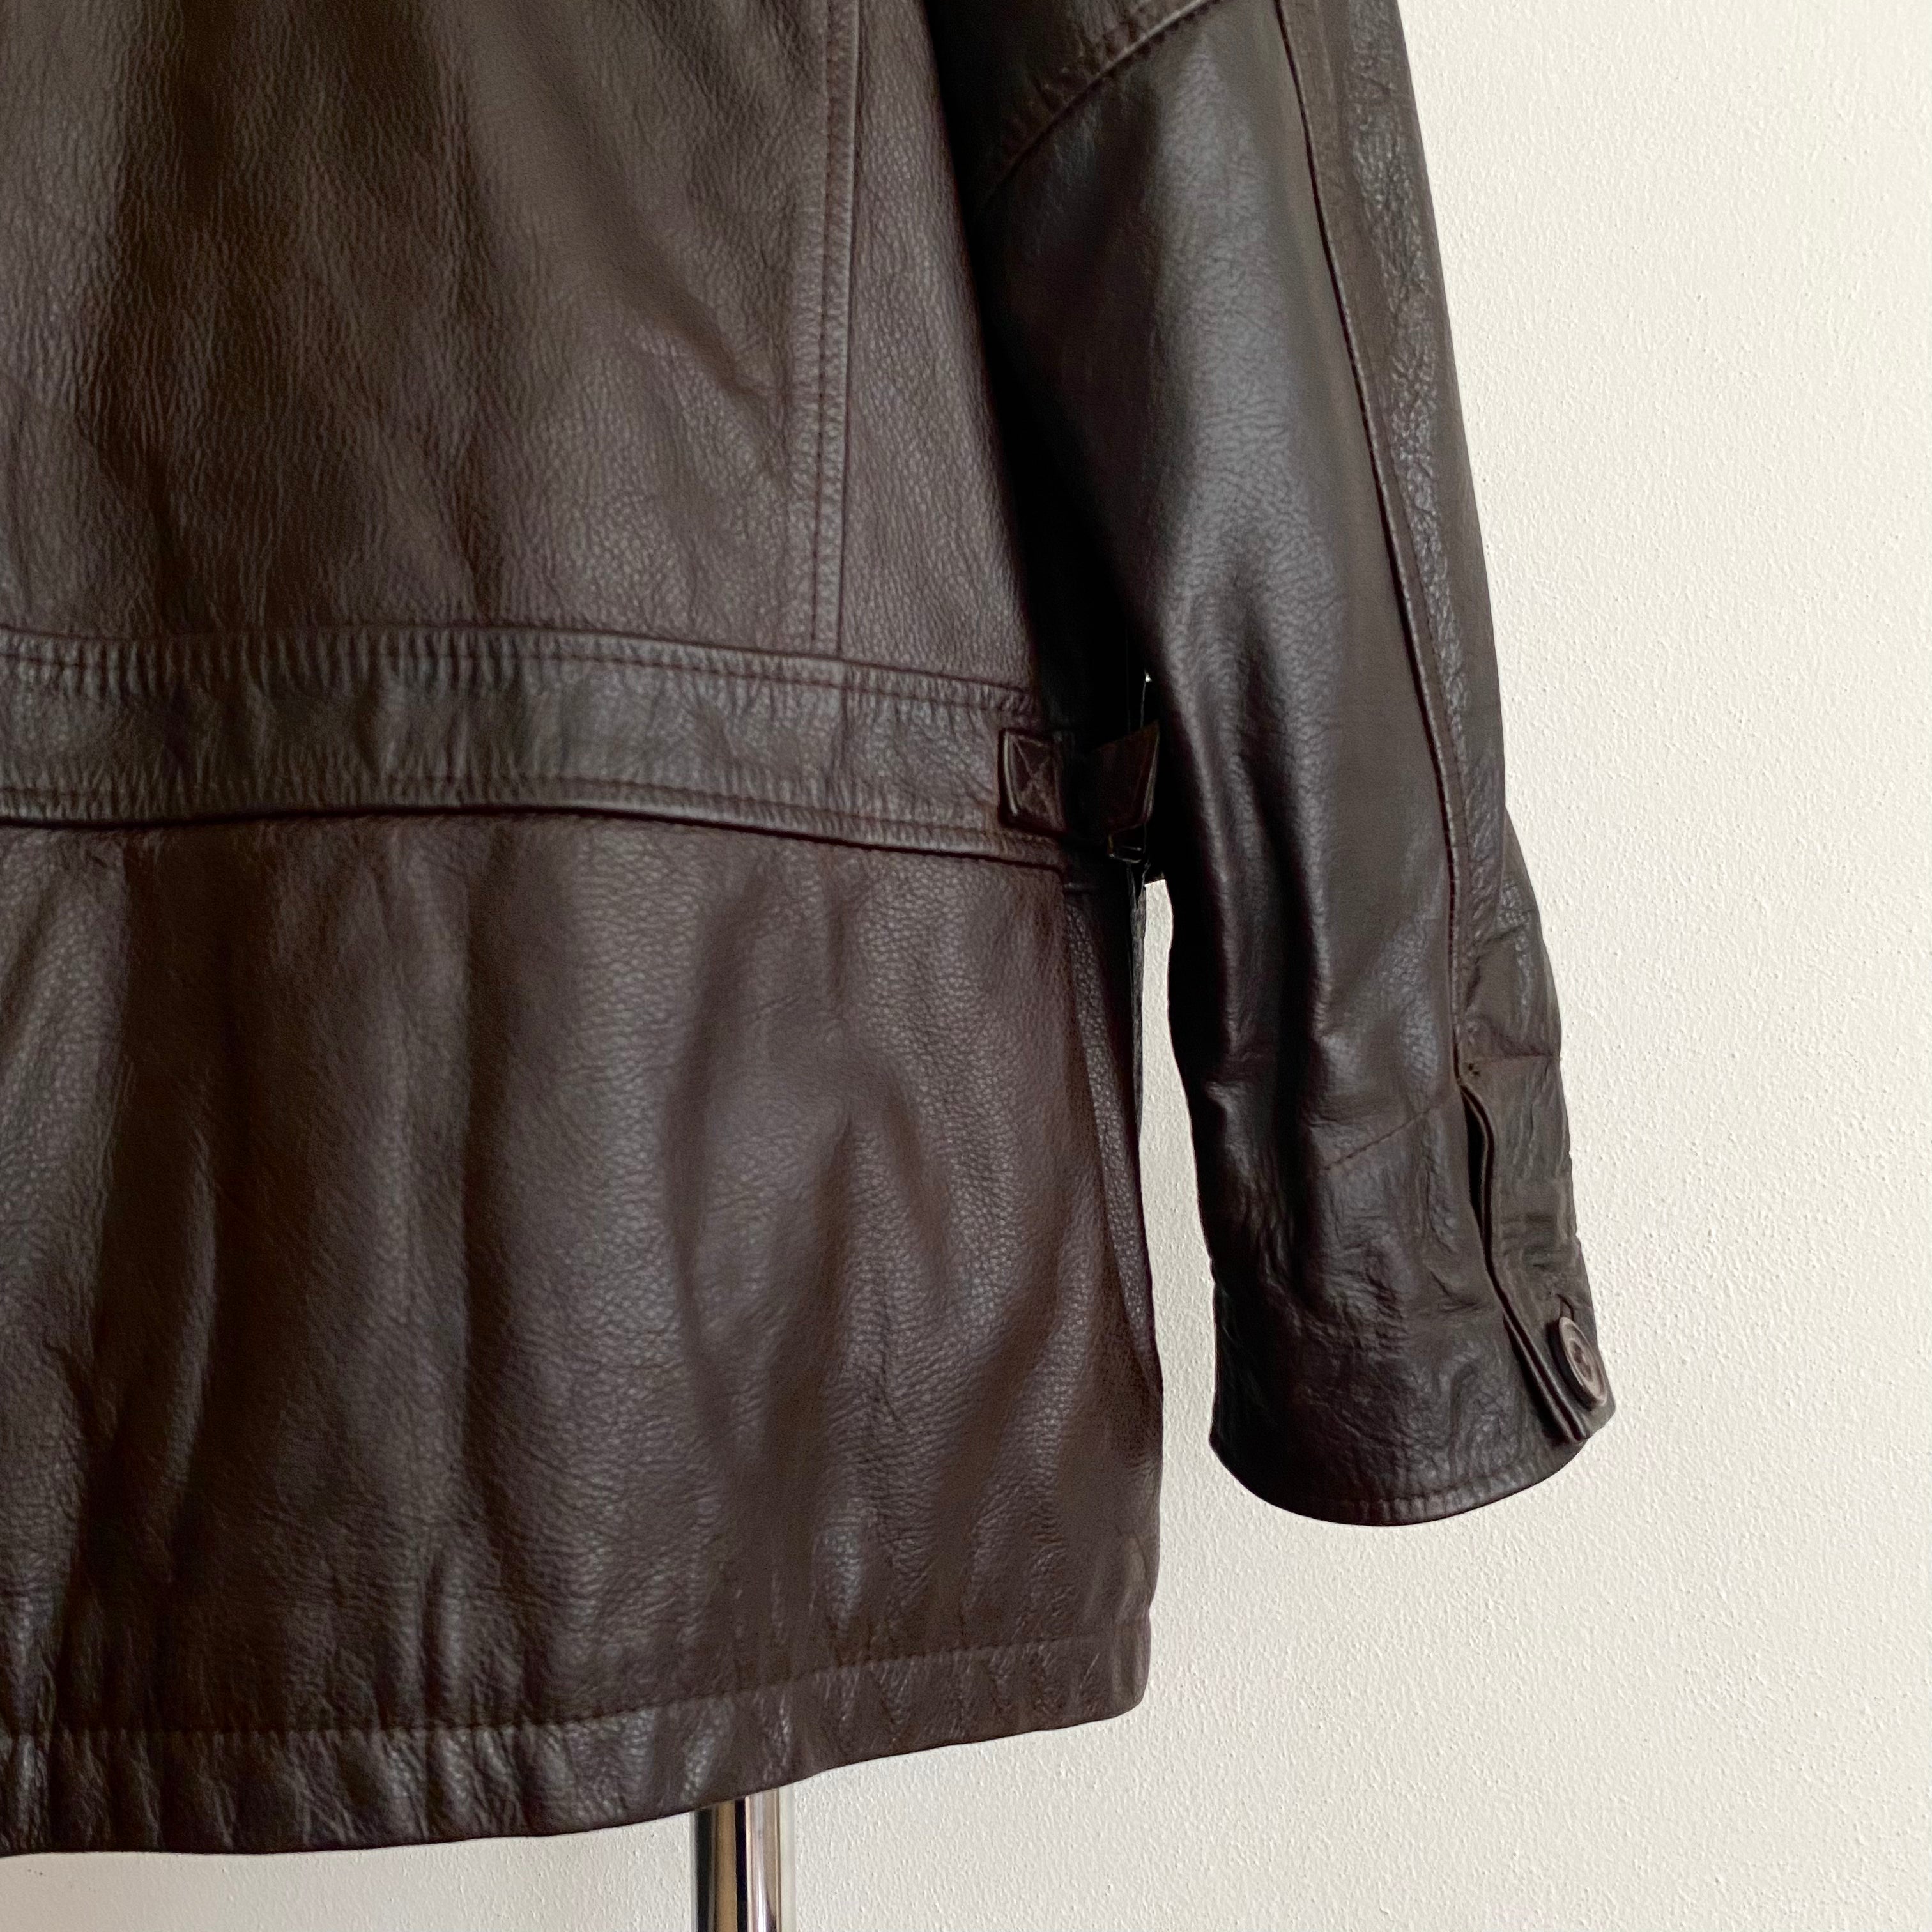 Vintage Chevignon Brown Leather - XL